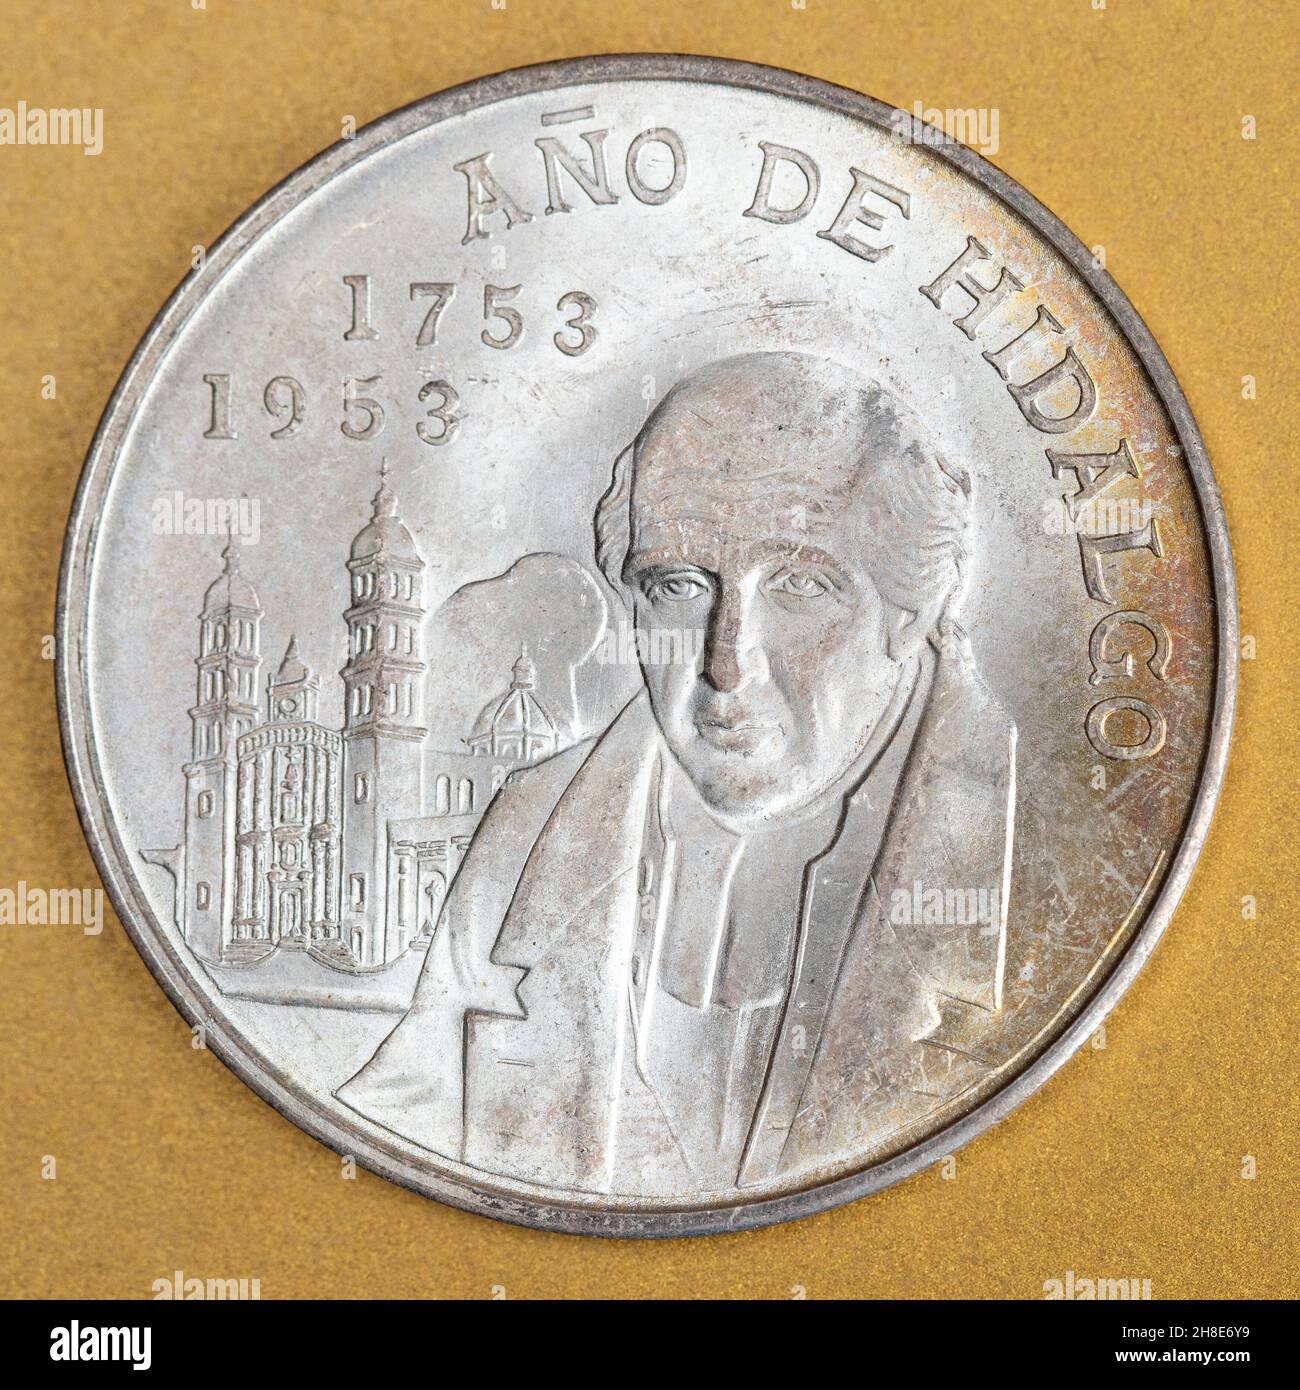 Mexico 1974 Cinco 5 Peso Coin Vintage Old Mexican Currency Money 